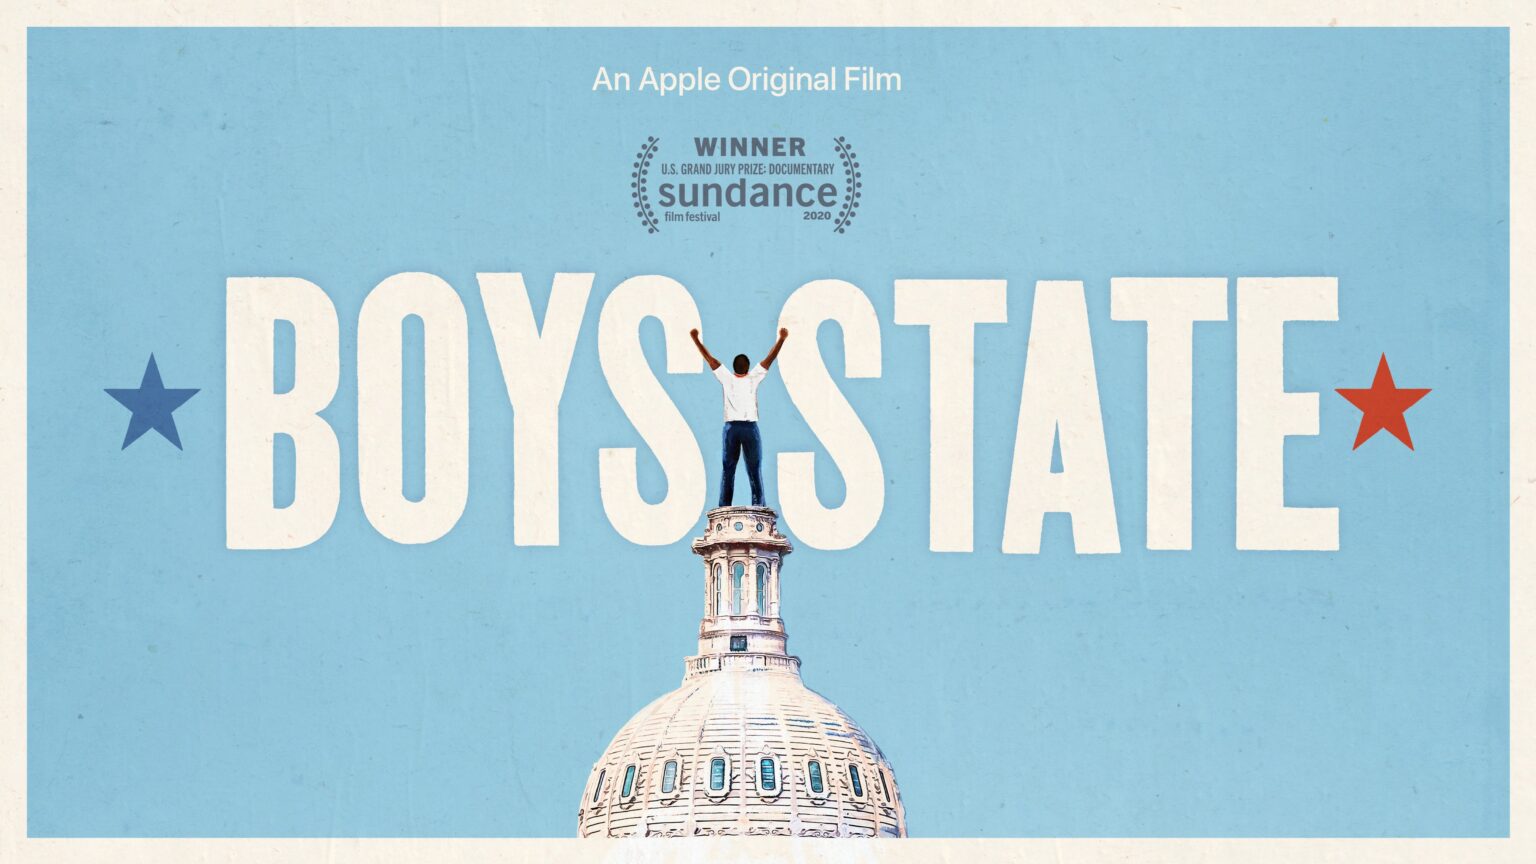 First Boys State trailer makes politics look fun.